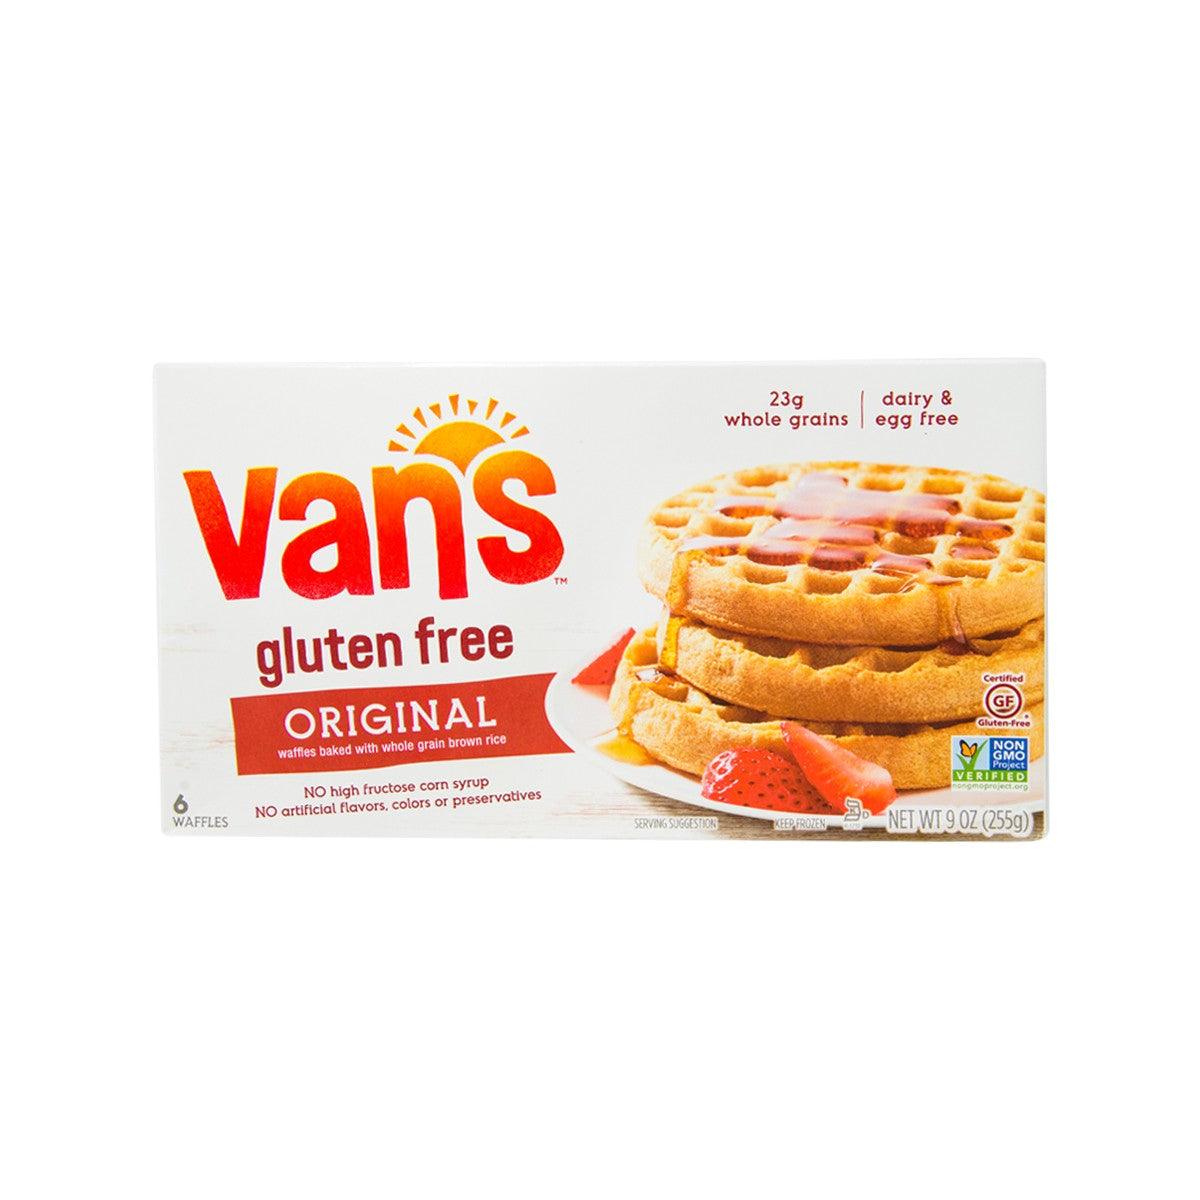 vans gluten free waffles ingredients